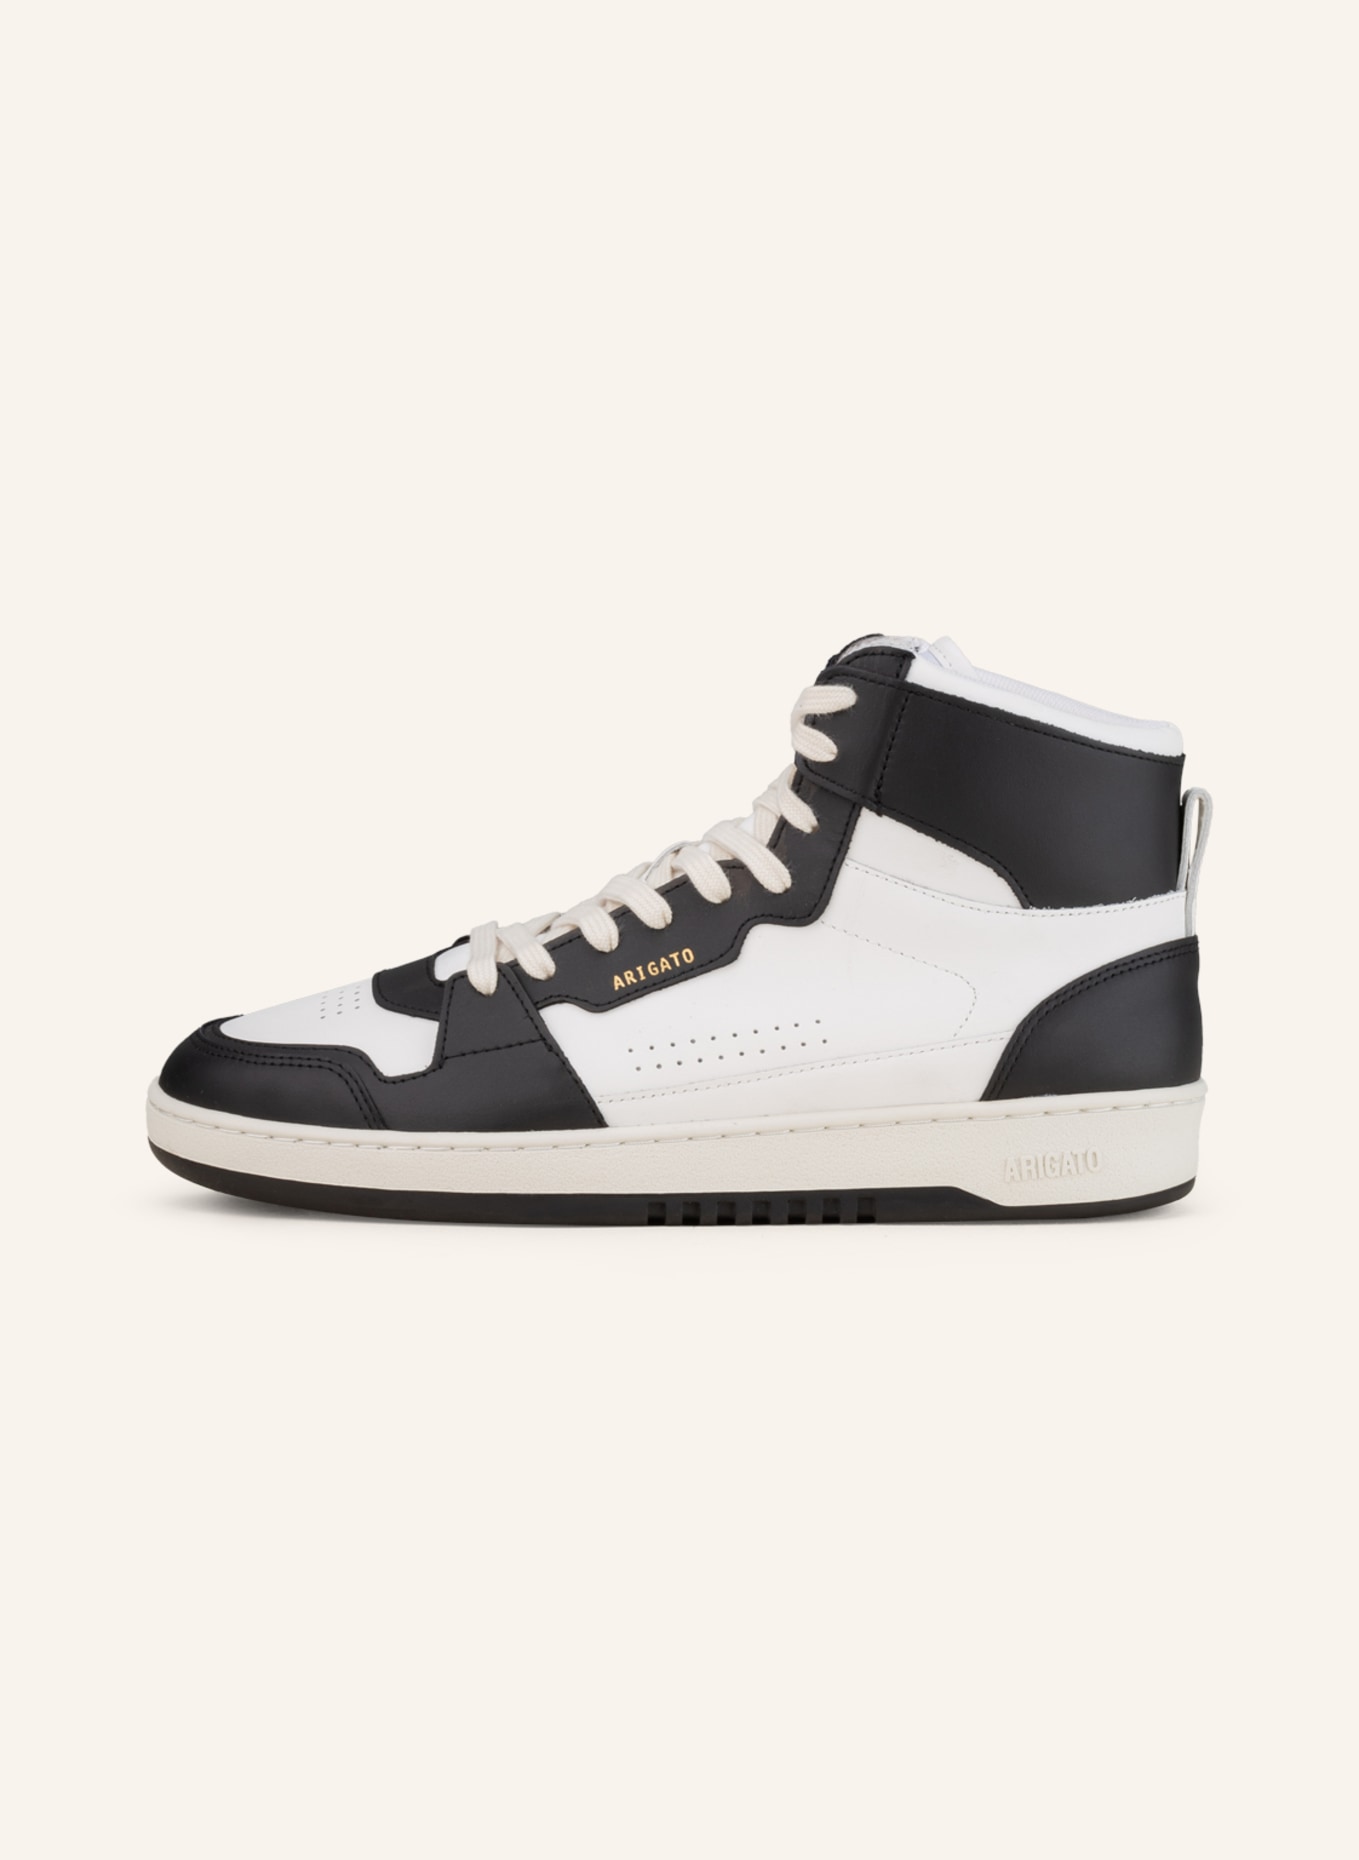 AXEL ARIGATO Hightop-Sneaker DICE, Farbe: WEISS/ SCHWARZ (Bild 4)